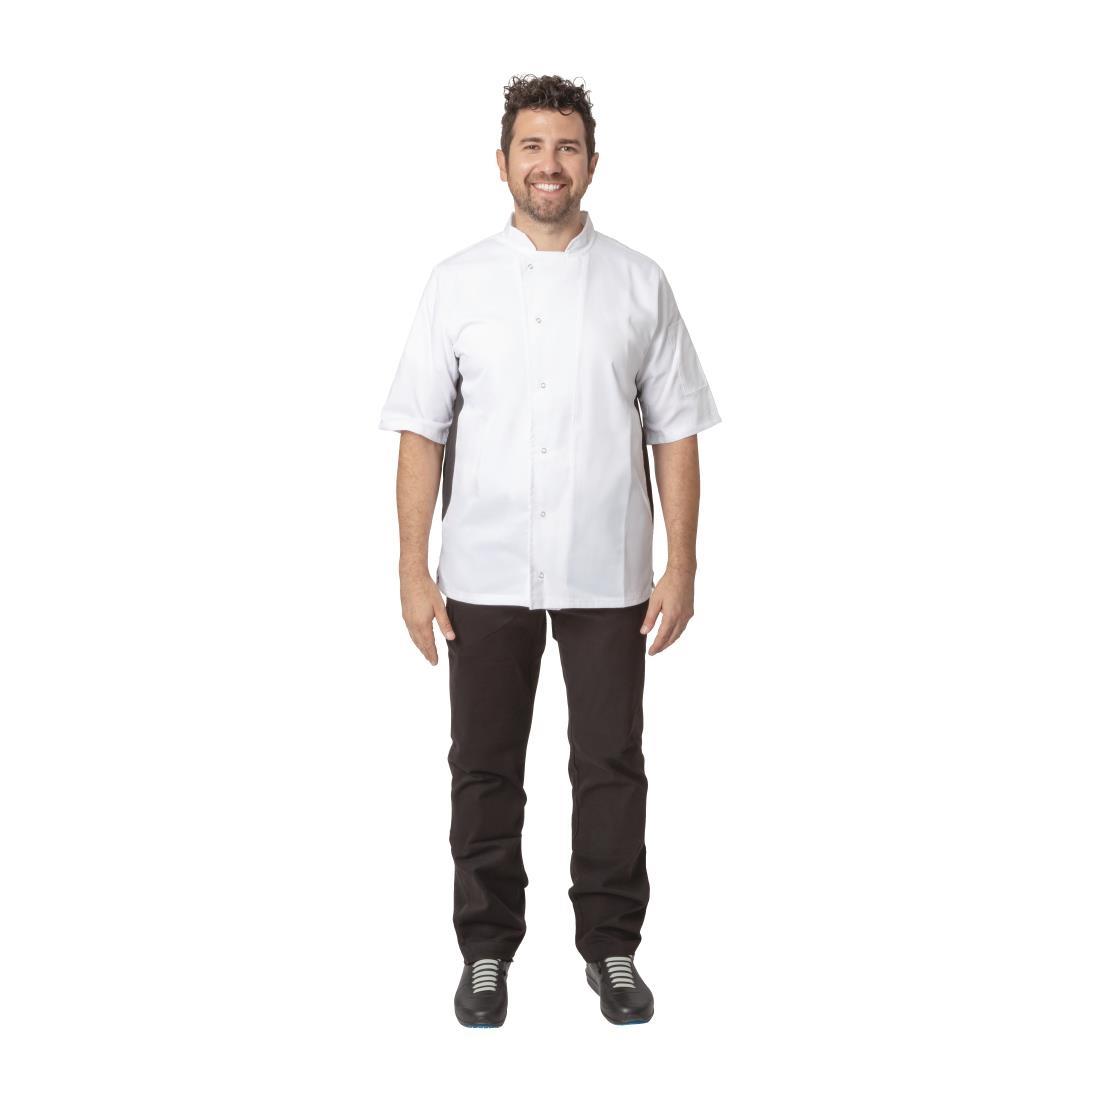 Whites Nevada Unisex Chefs Jacket Short Sleeve Black and White 2XL - A928-XXL  - 2